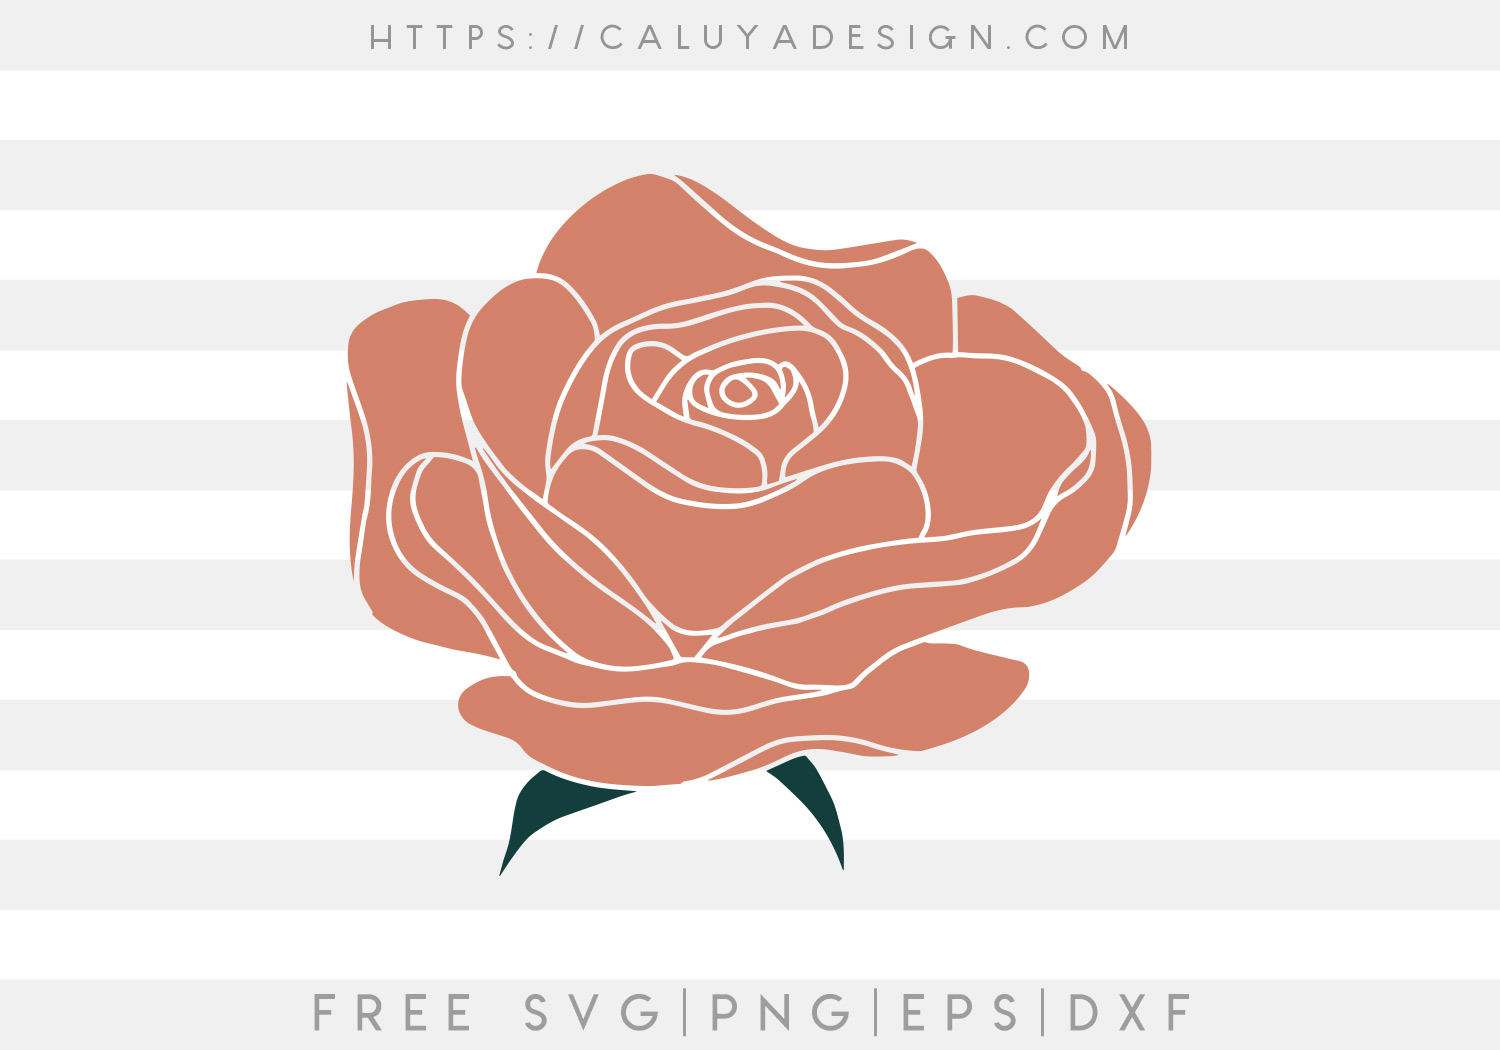 Free Handdrawn Rose SVG